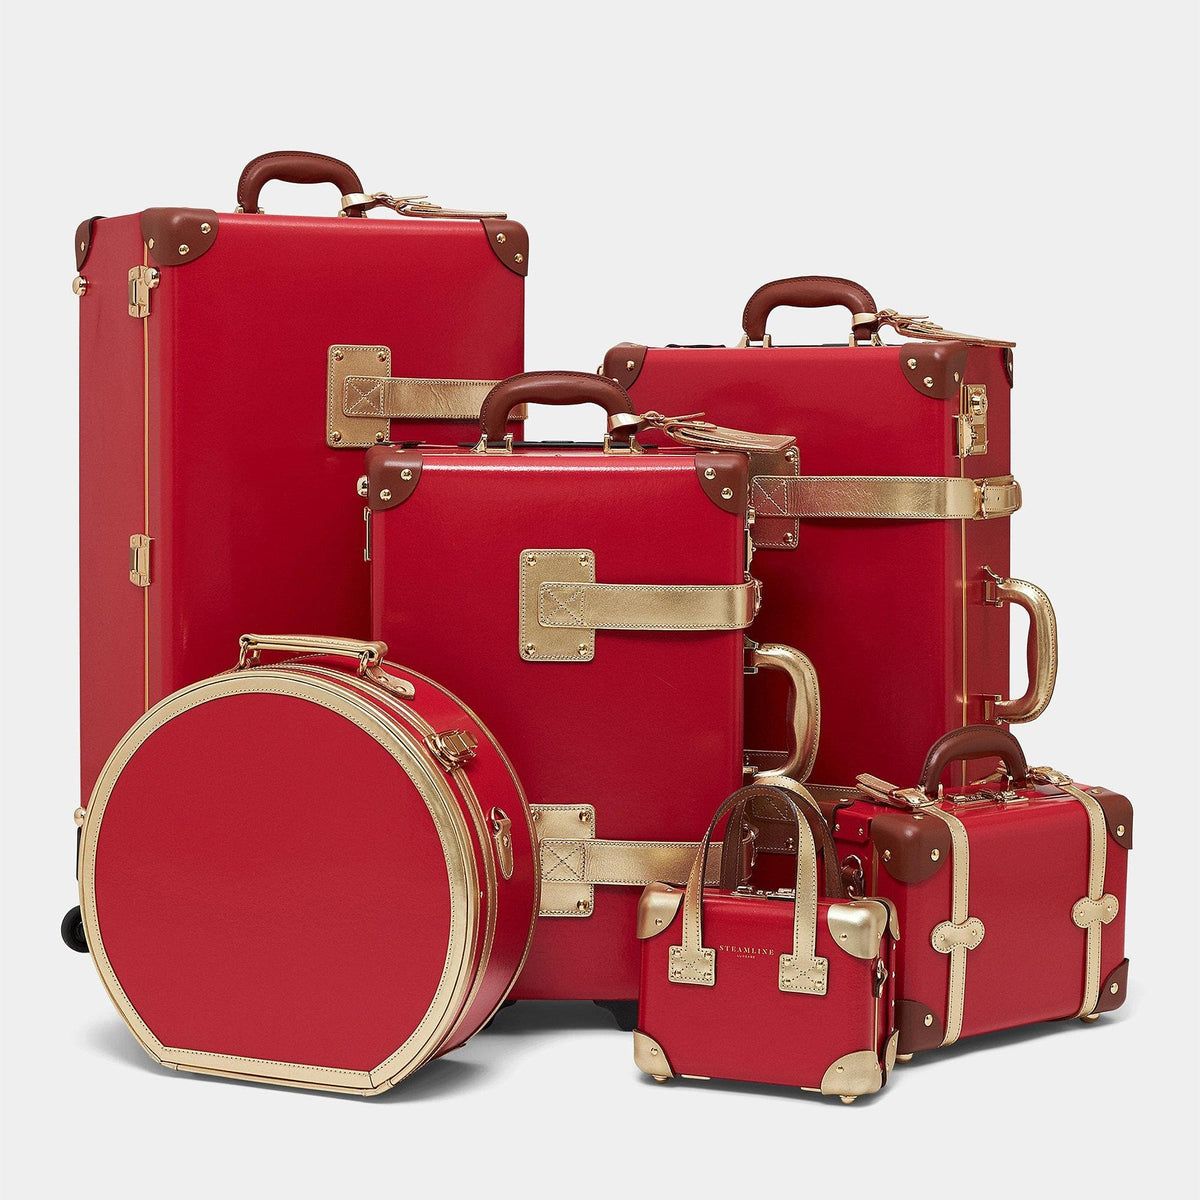 The Soprano - Red Vanity Vanity Steamline Luggage 